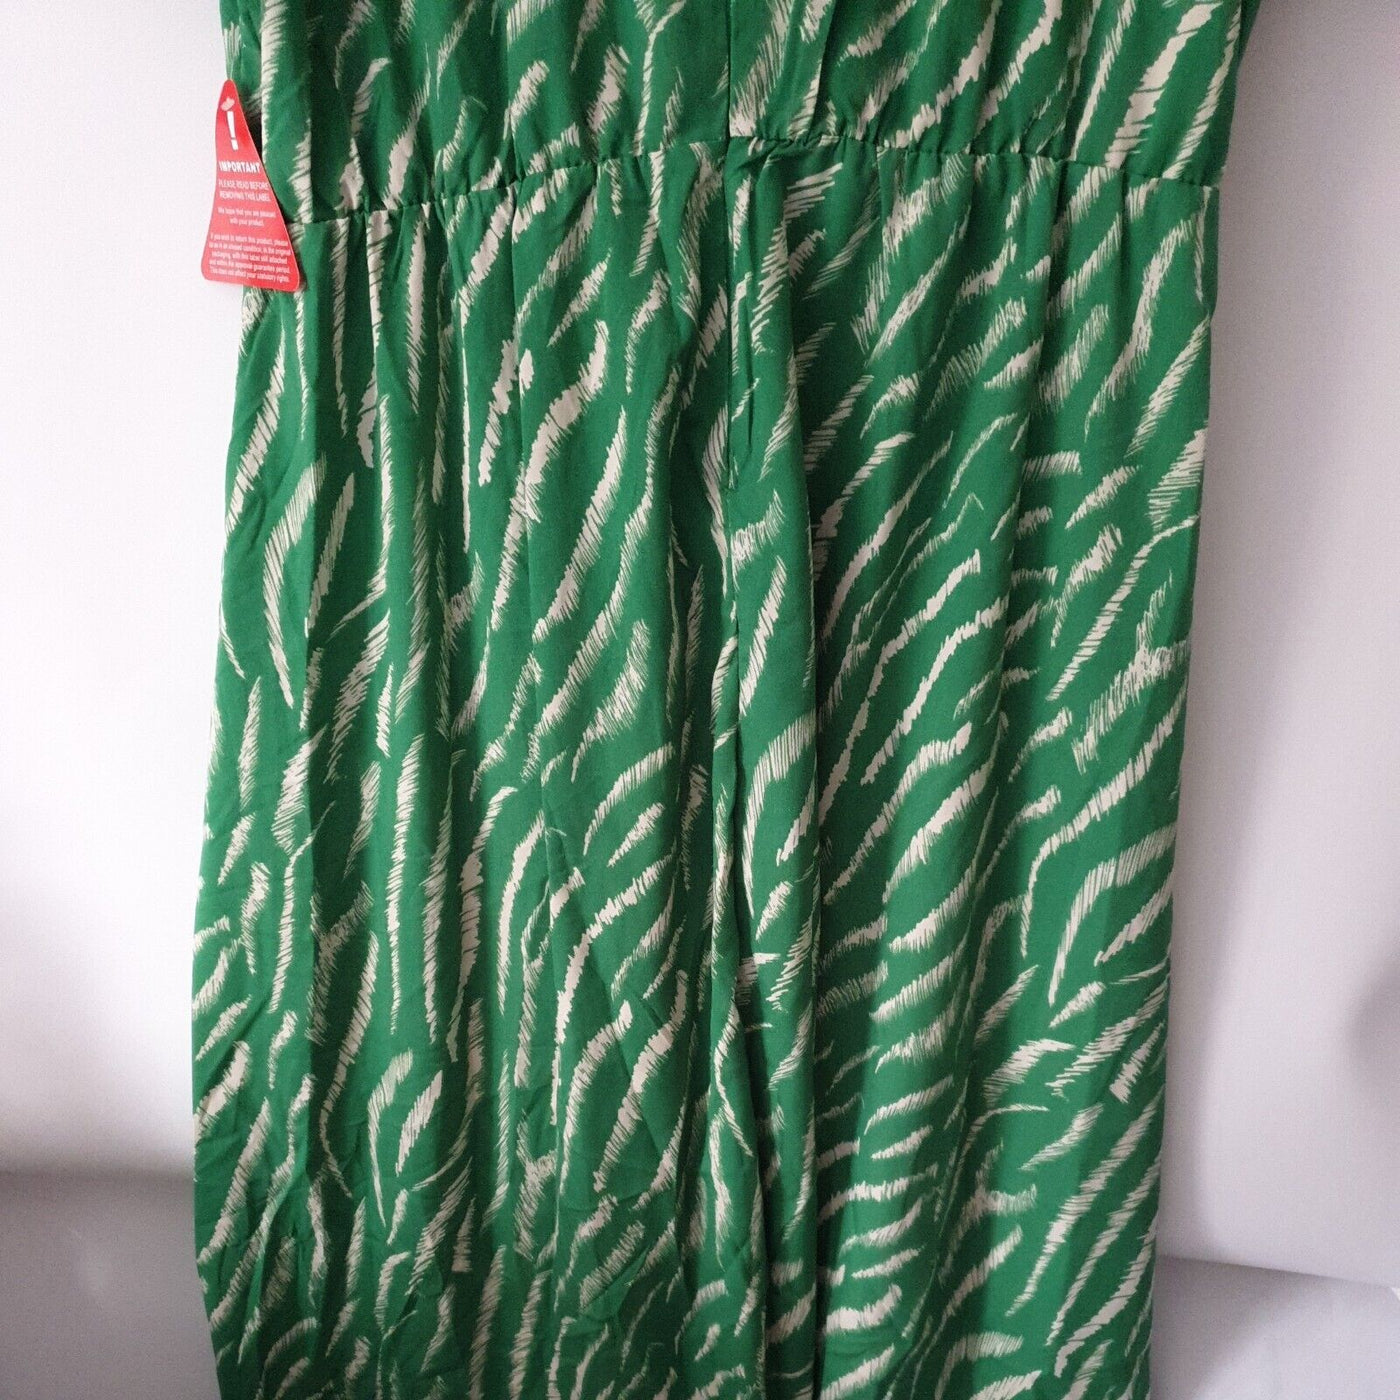 AX Paris Curve Apple Green Printed Wrap Midi Dress Size 26****Ref V68